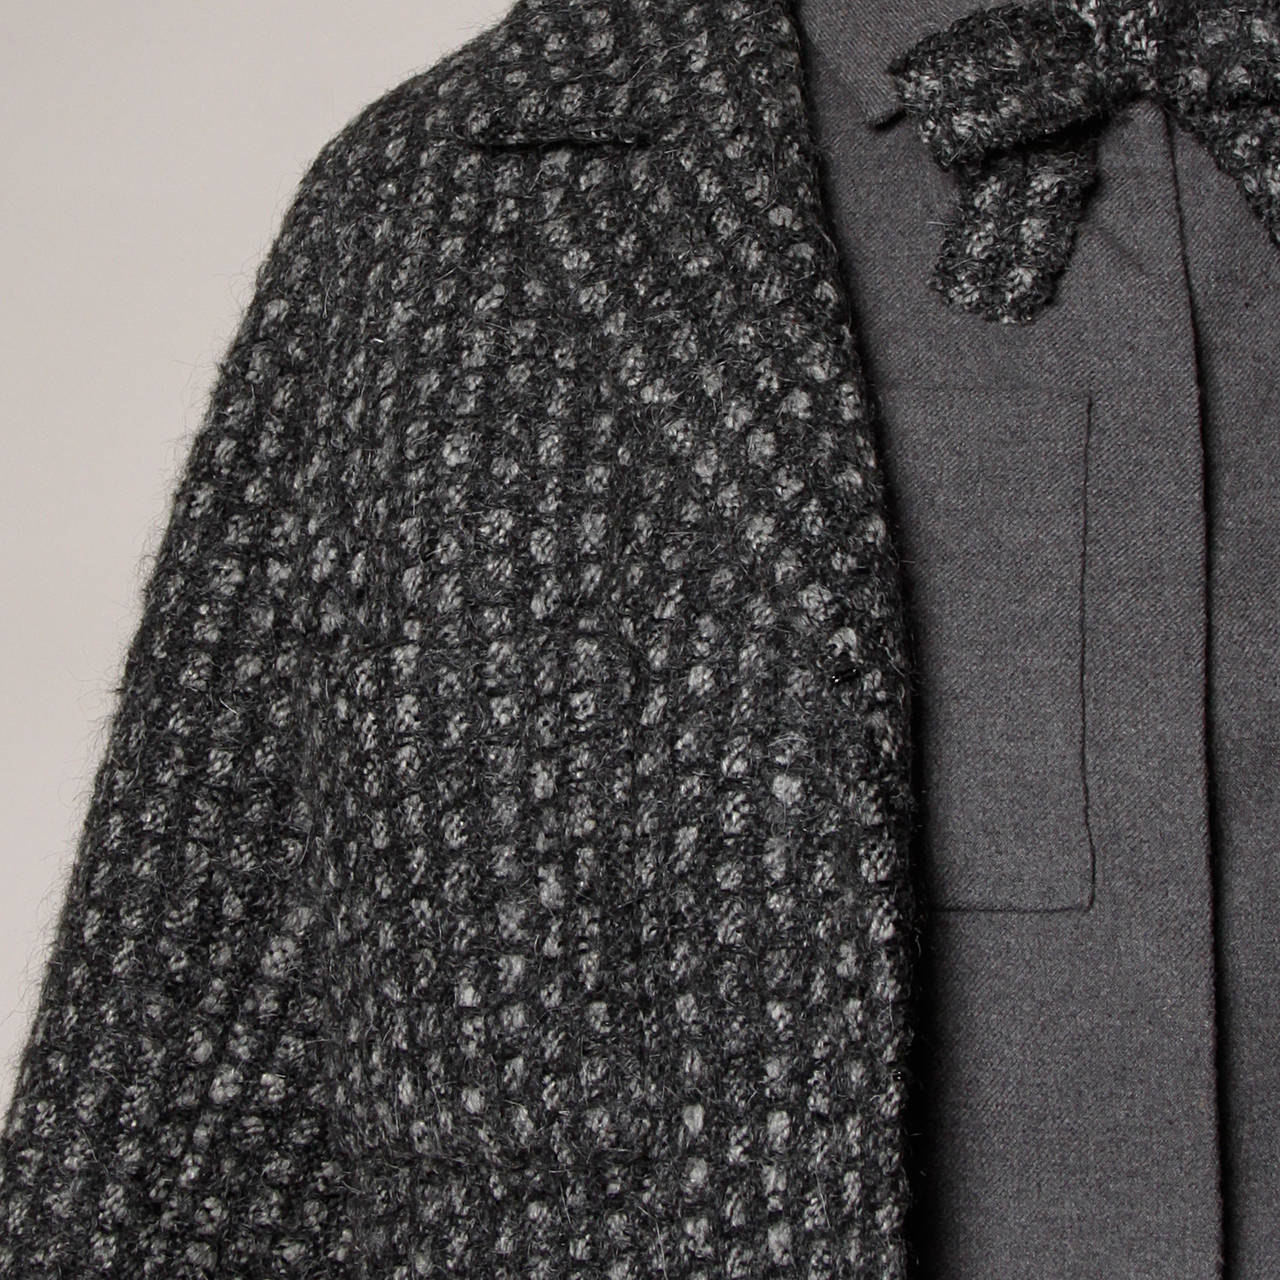 Tiziani 1960s Italian Couture Cashmere Wool 4-Piece Ensemble or Skirt Suit 1